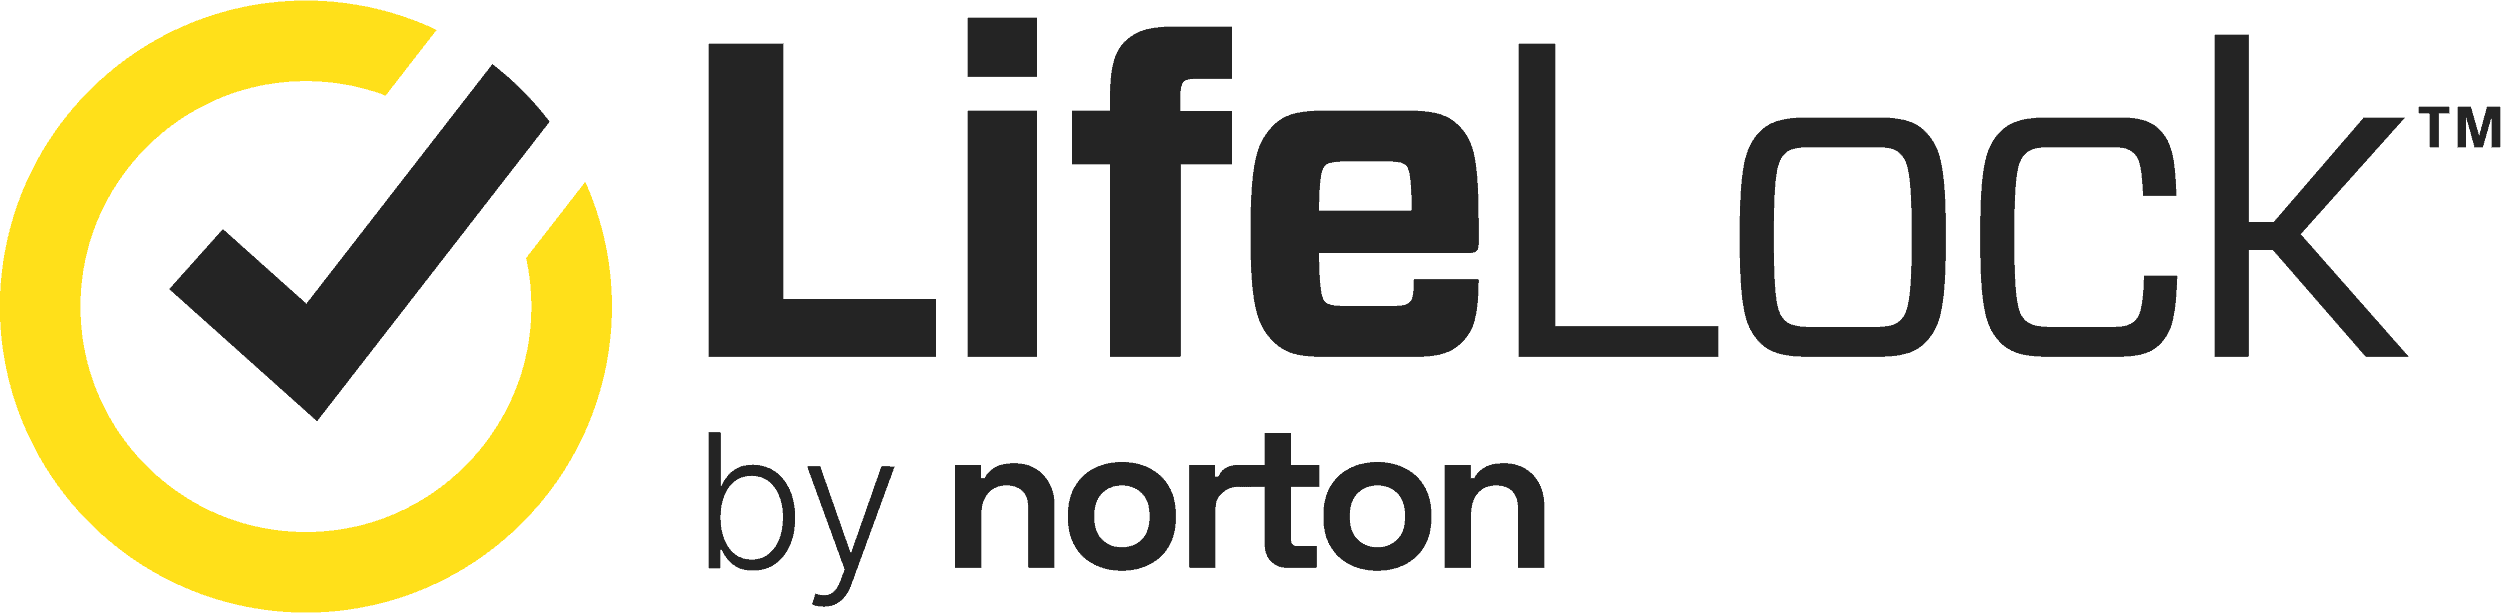 LifeLock-by-Norton